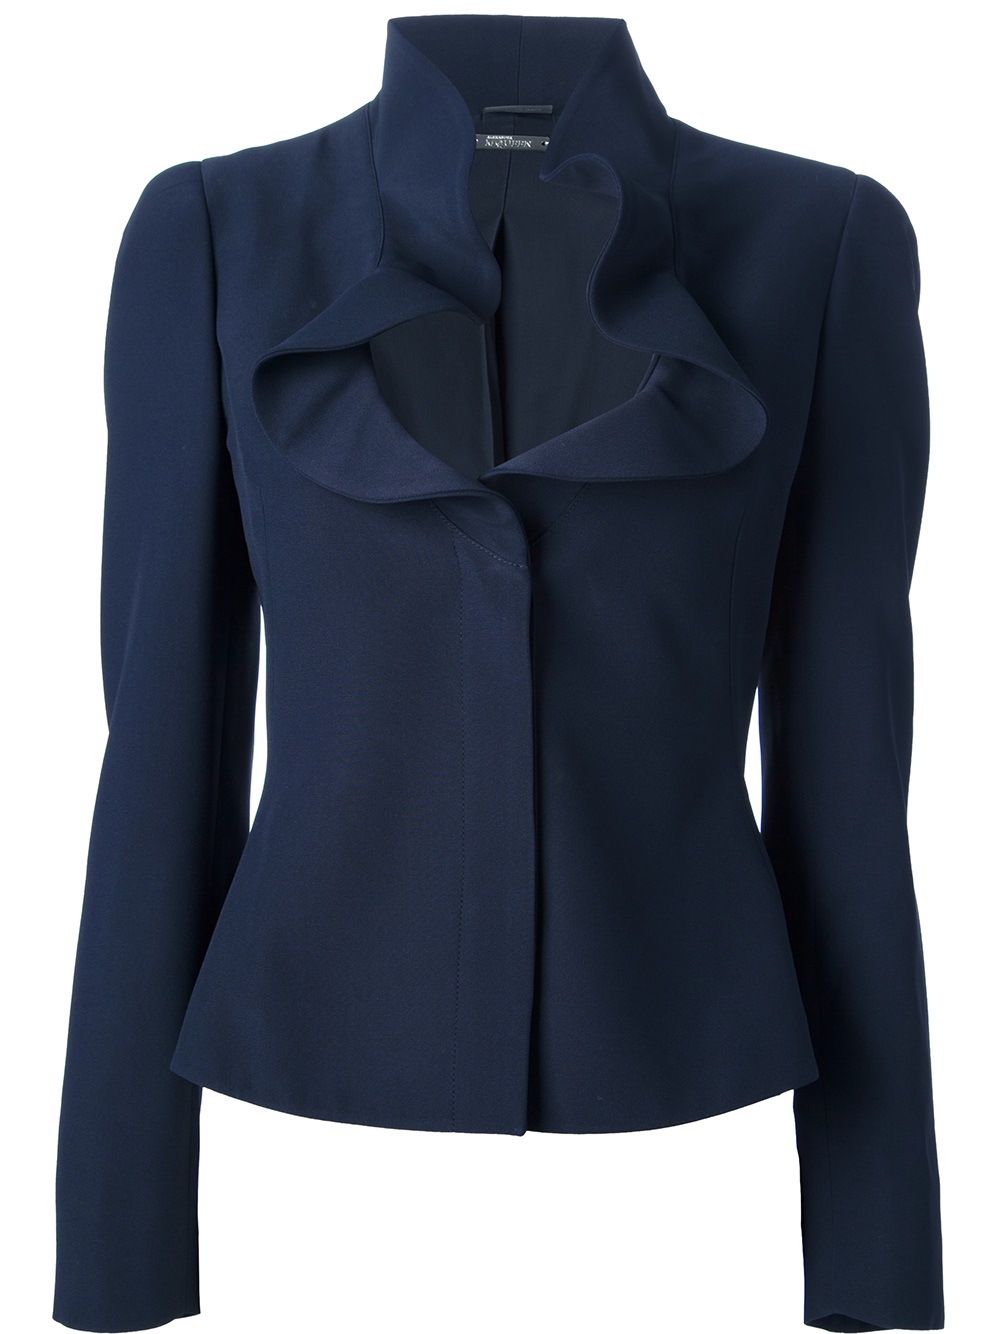 Lyst - Alexander Mcqueen Ruffle Collar Jacket in Blue